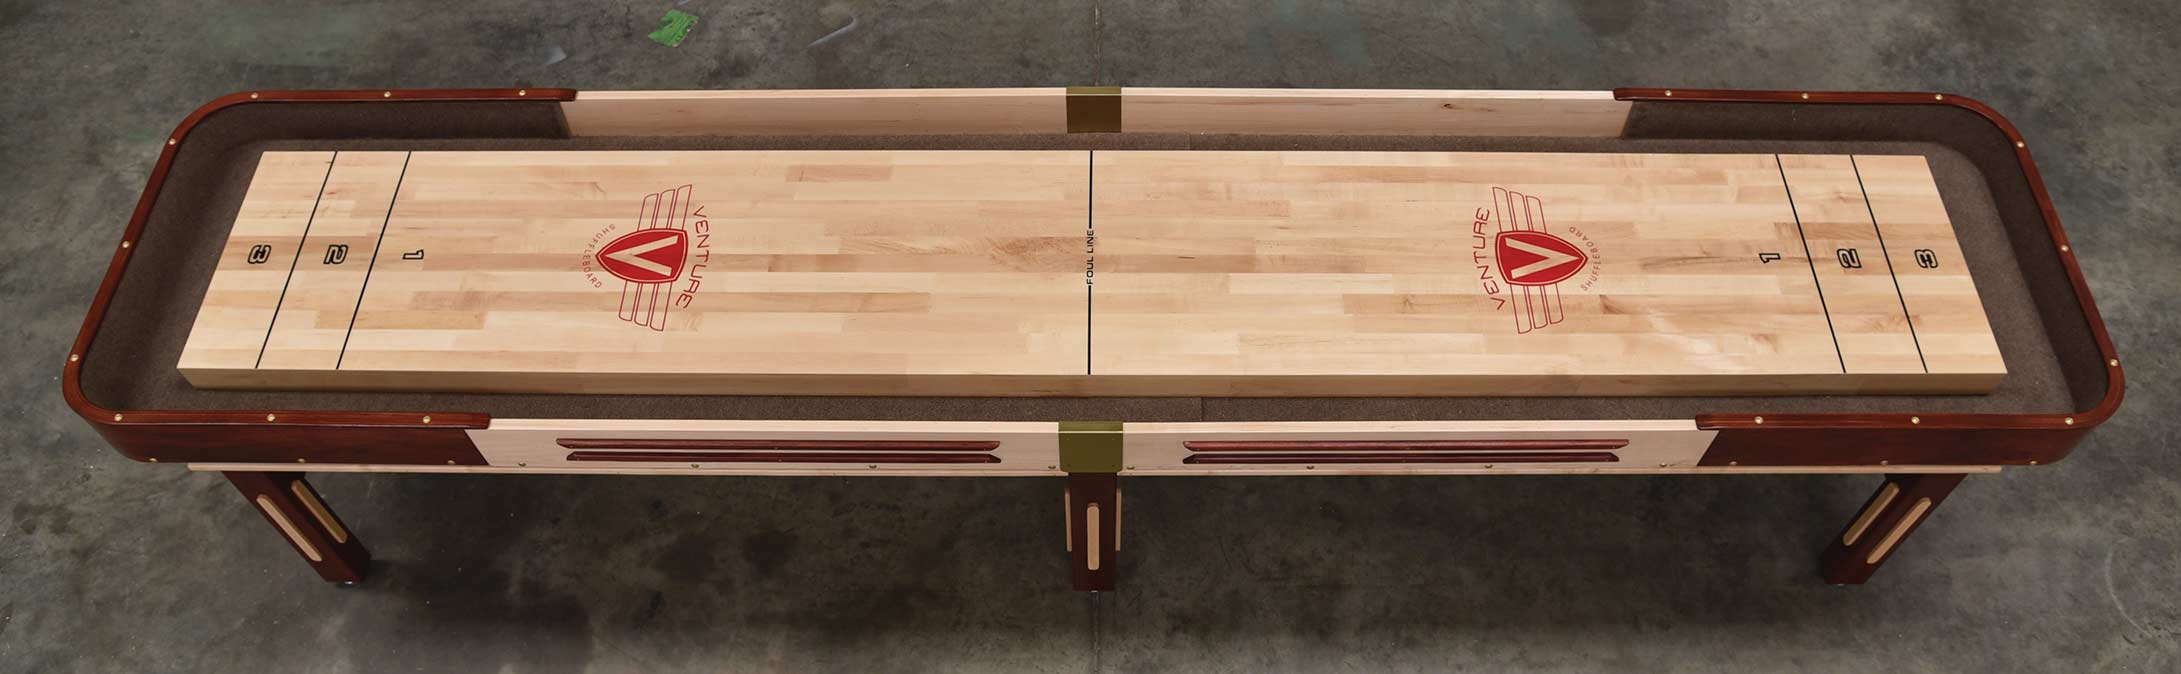 Venture Grand Deluxe 20' Shuffleboard Table